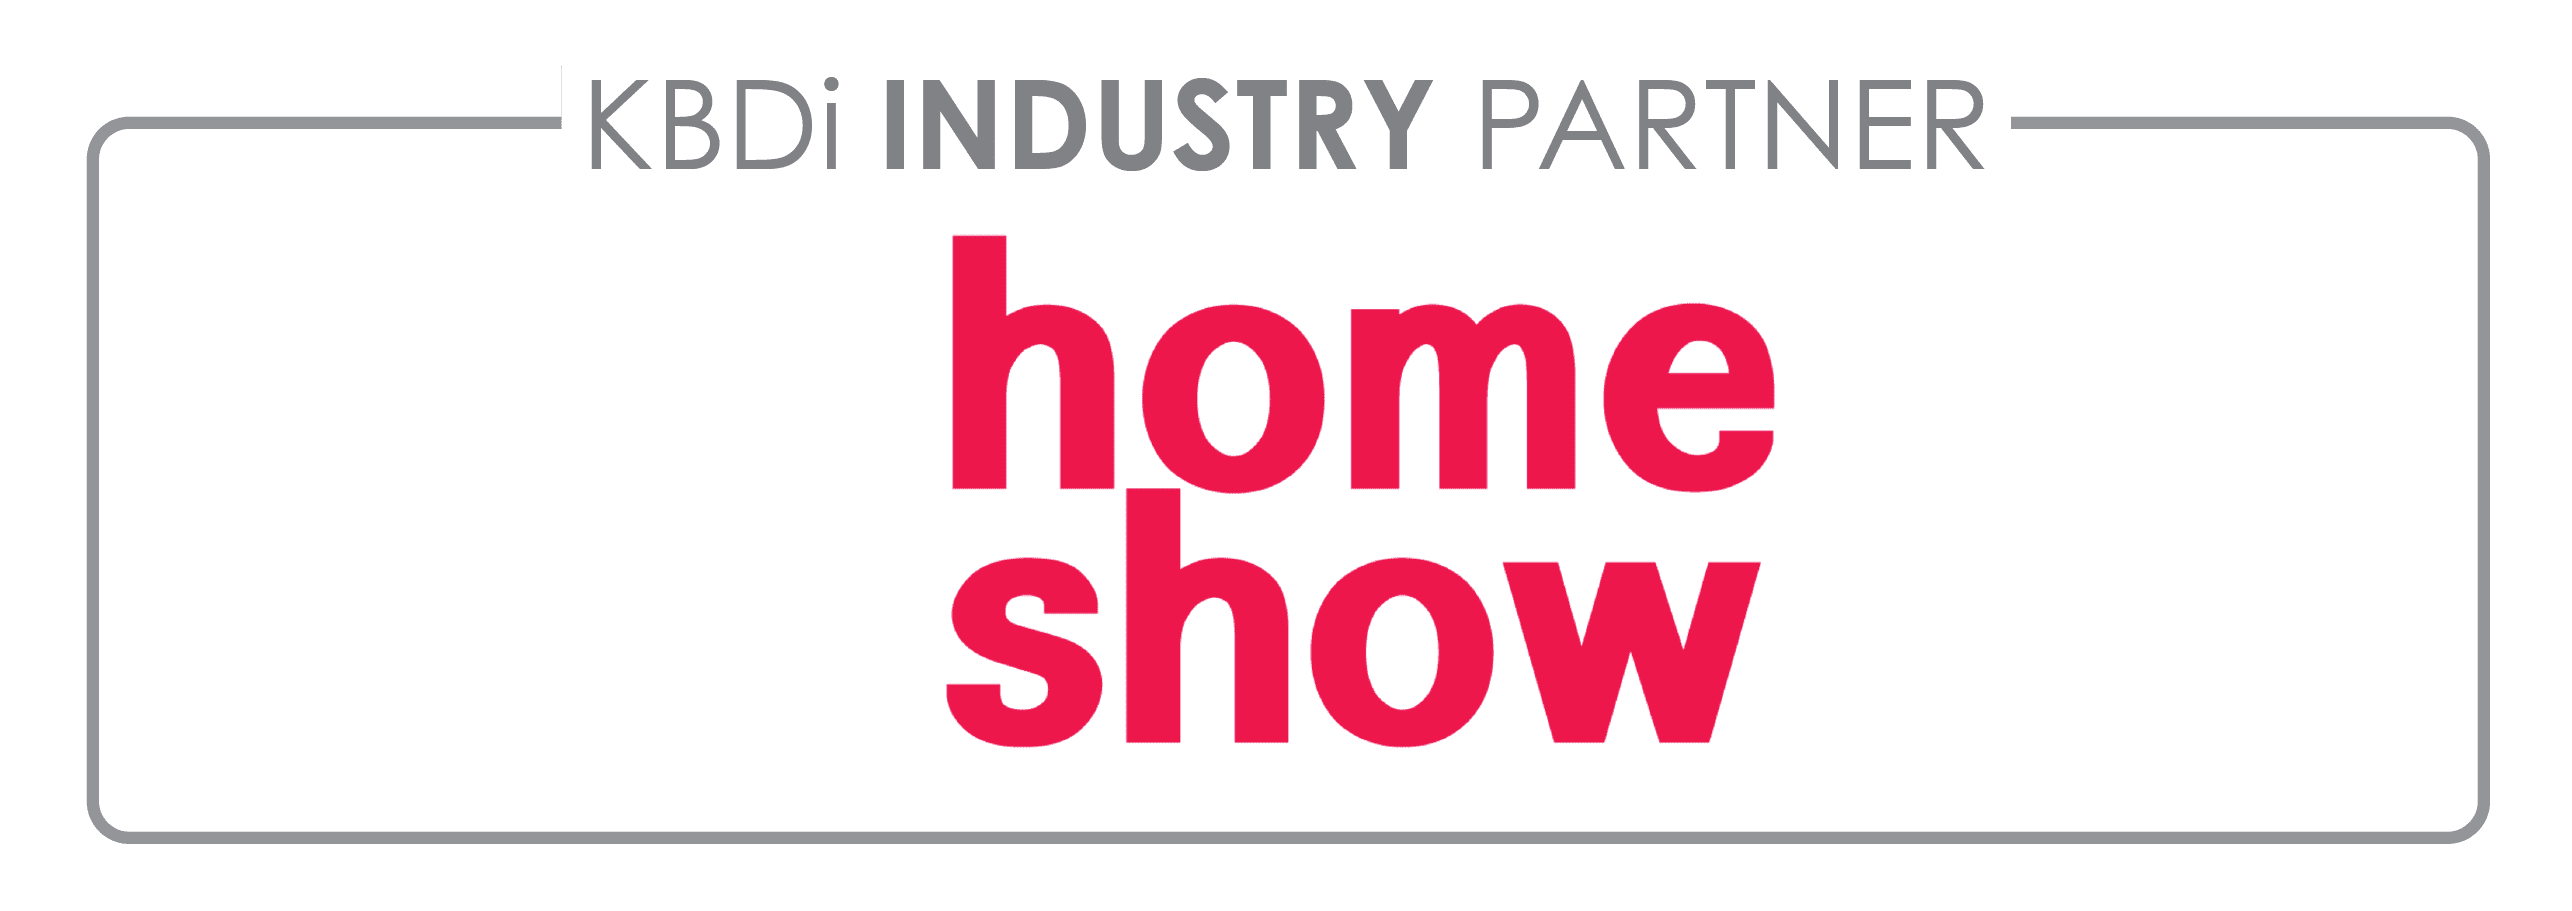 KBDi Industry Partner Home Show